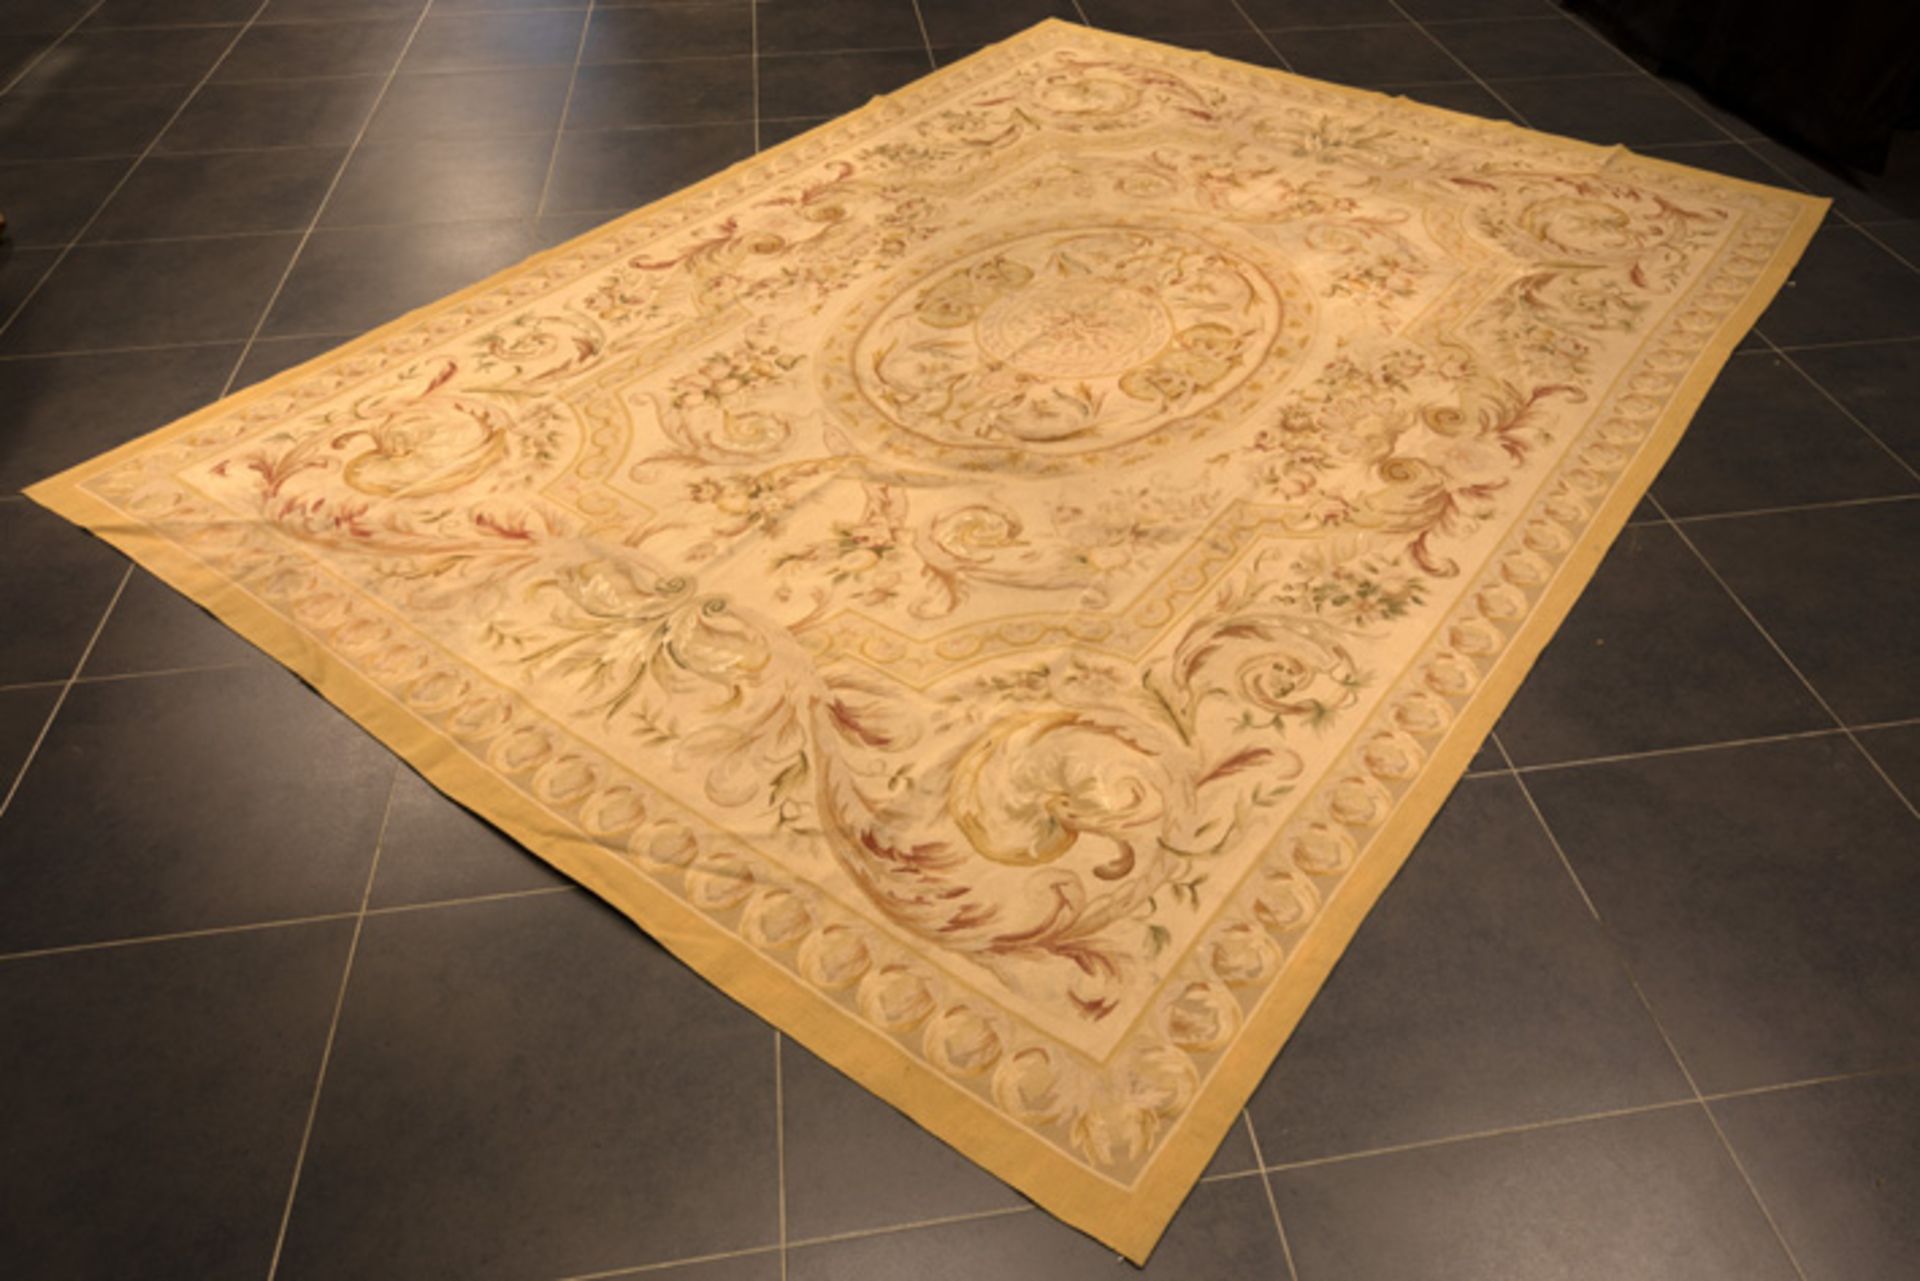 handwoven "Aubusson" tapestry rug with a typical Napoleon III decor || Goed bewaard, handgeweven "